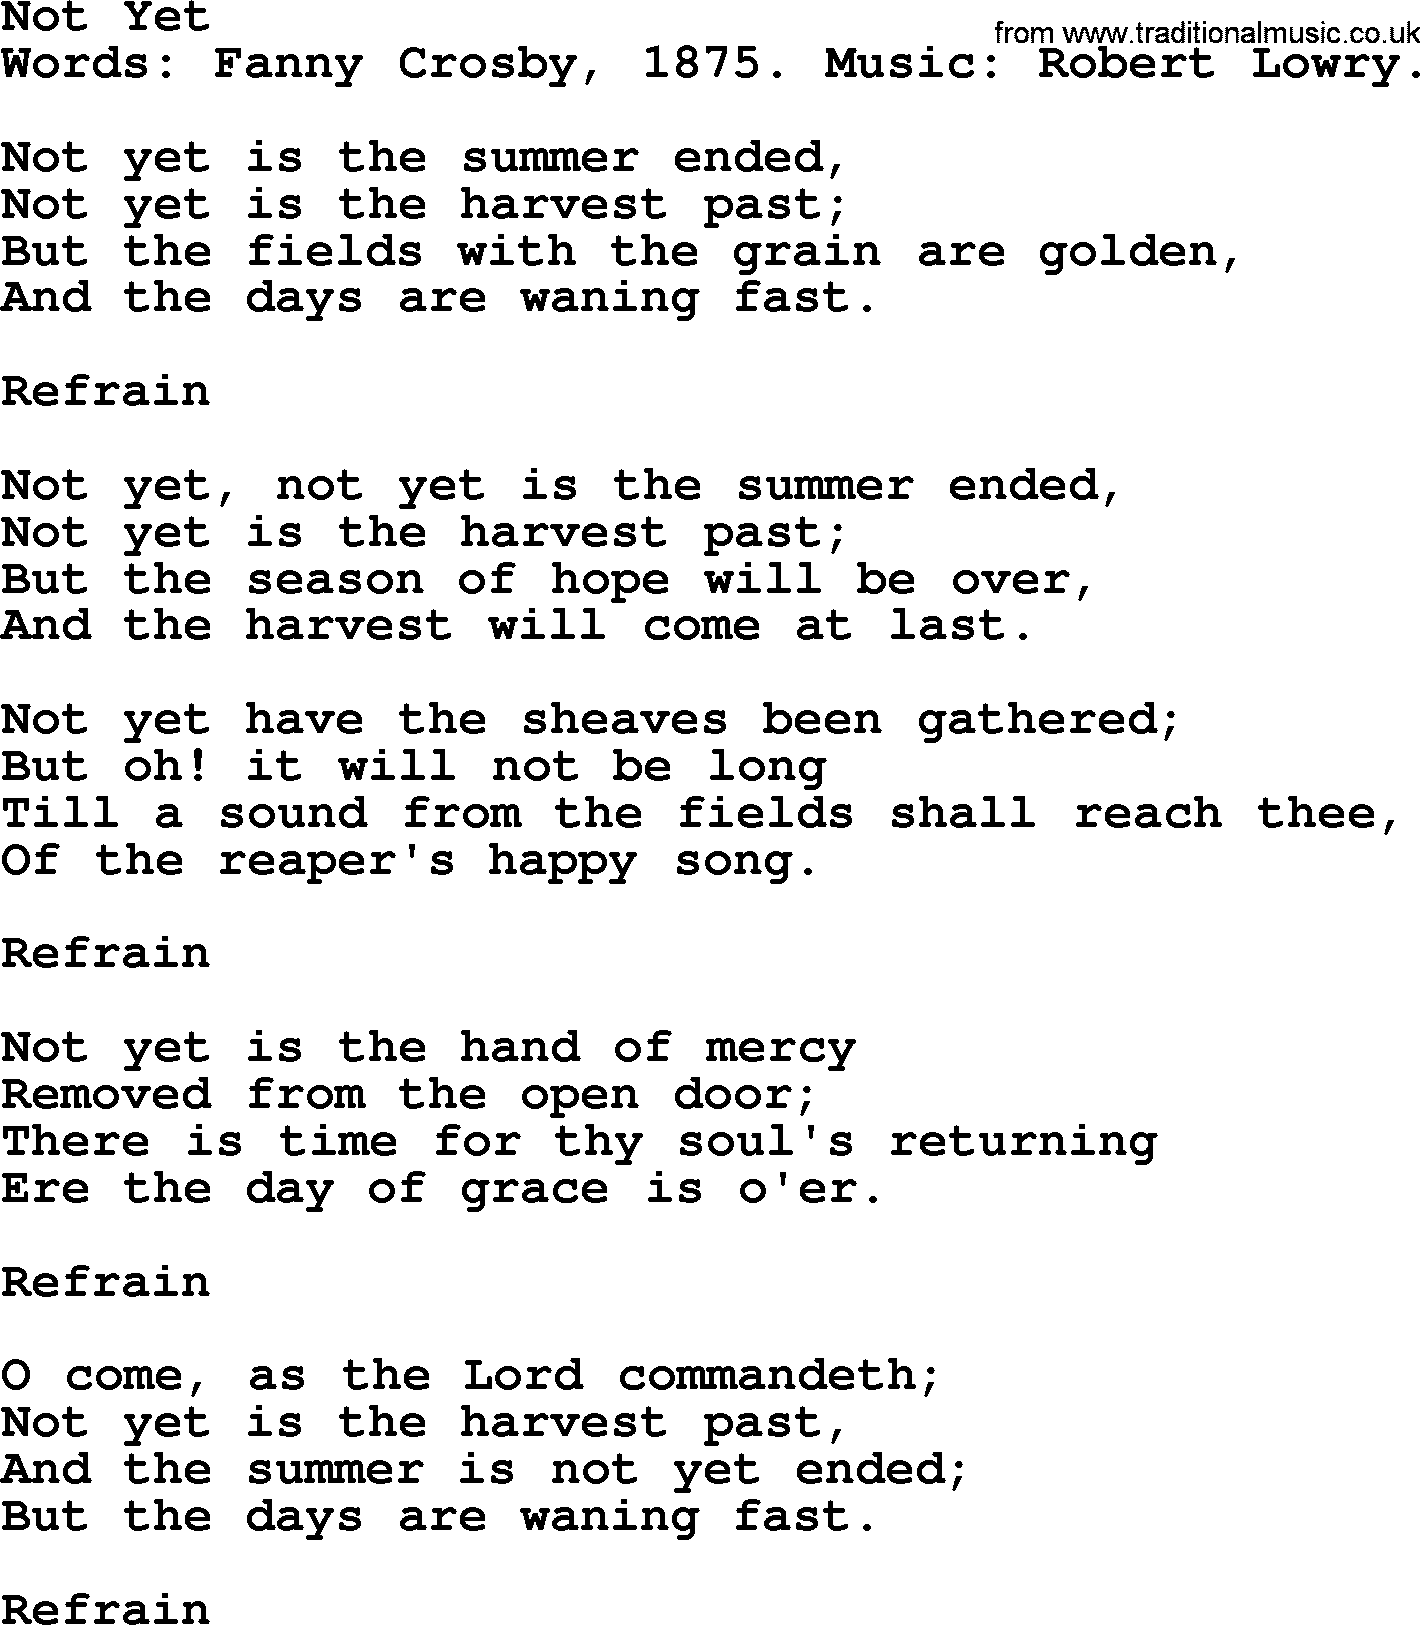 Fanny Crosby song: Not Yet, lyrics